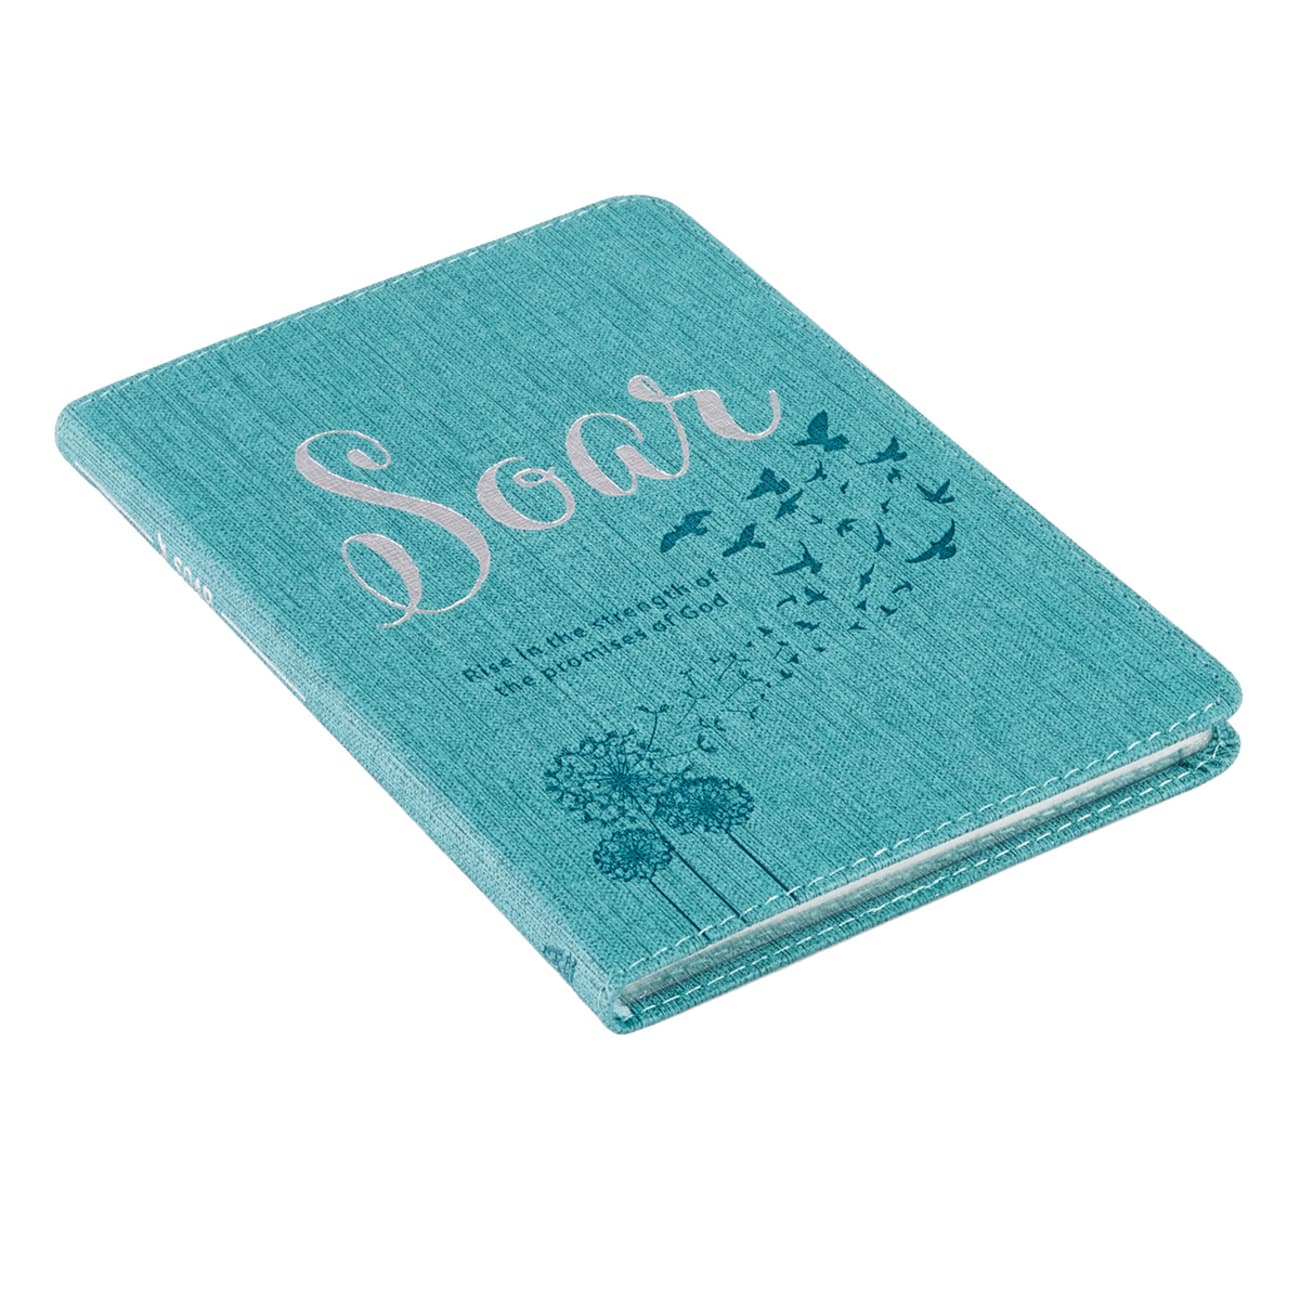 Promise Book: Soar (Turquoise) Imitation Leather